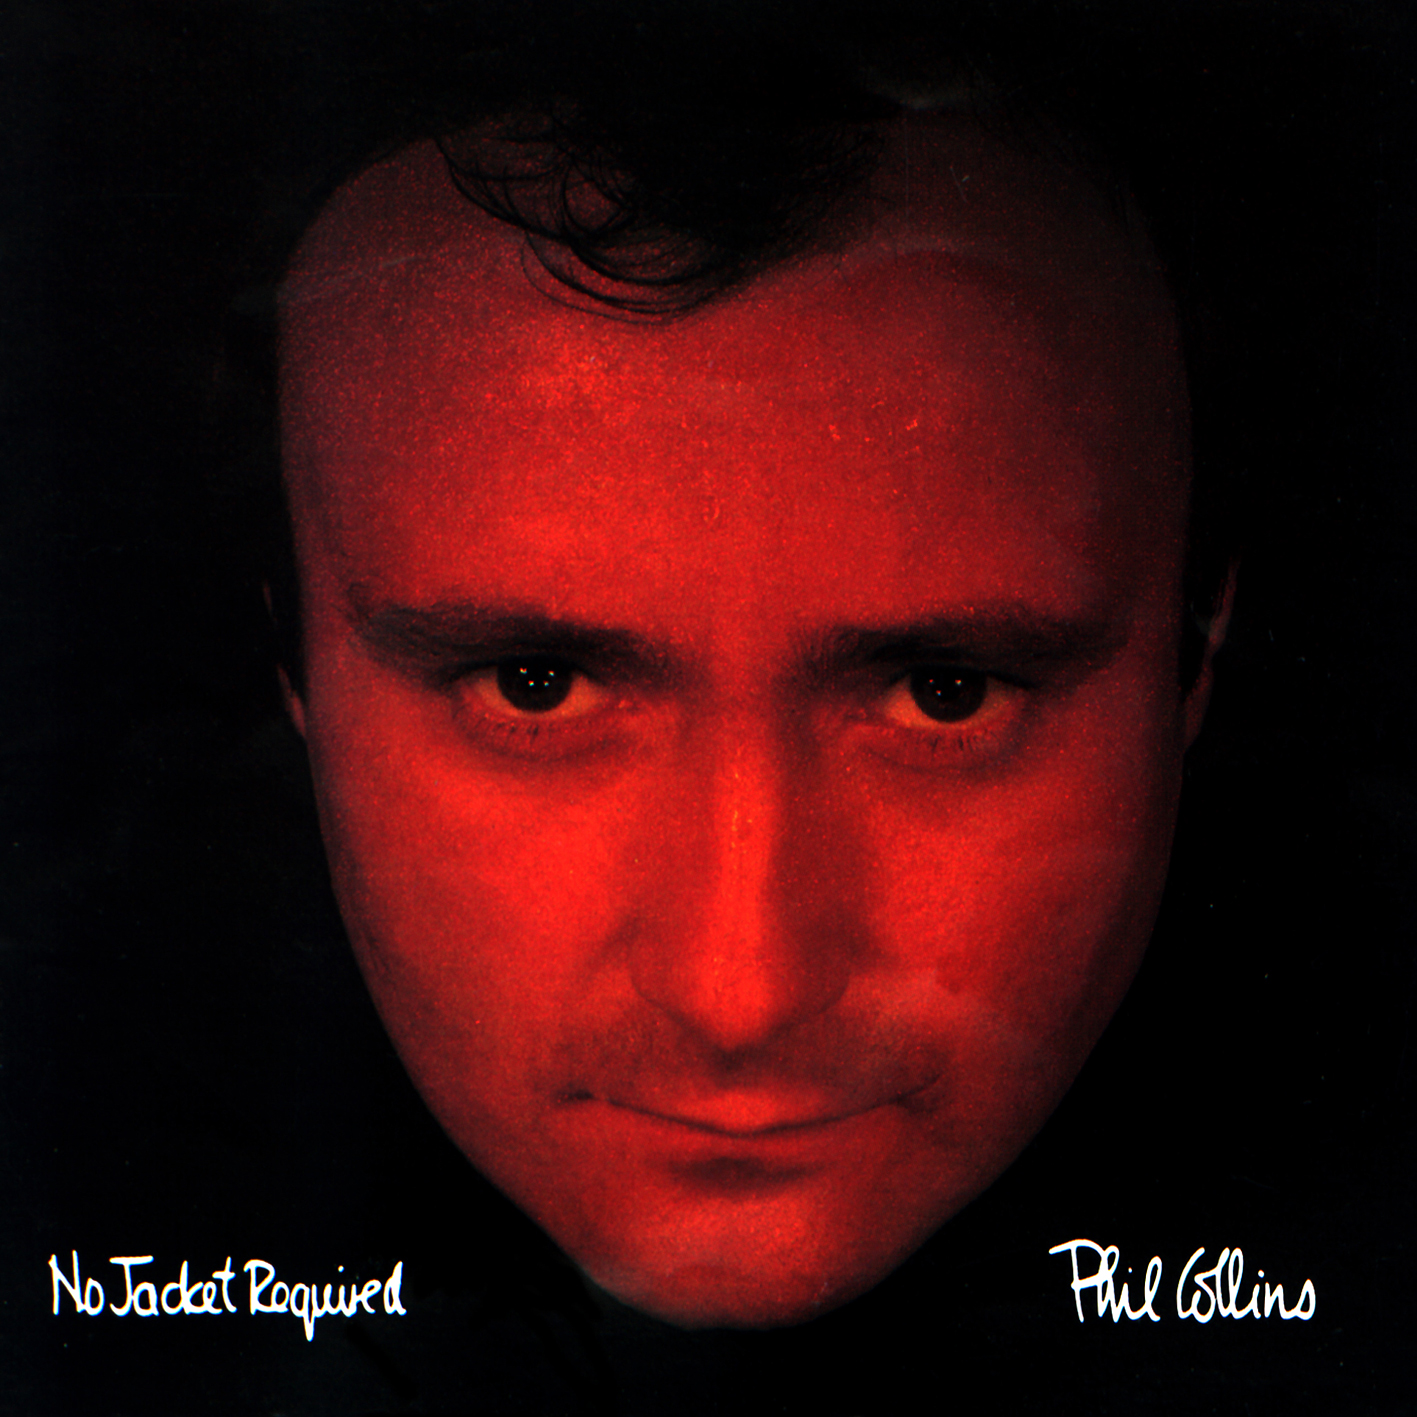 Phil Collins – No Jacket Required (1985/2013) [HDTracks 24bit/44.1kHz]